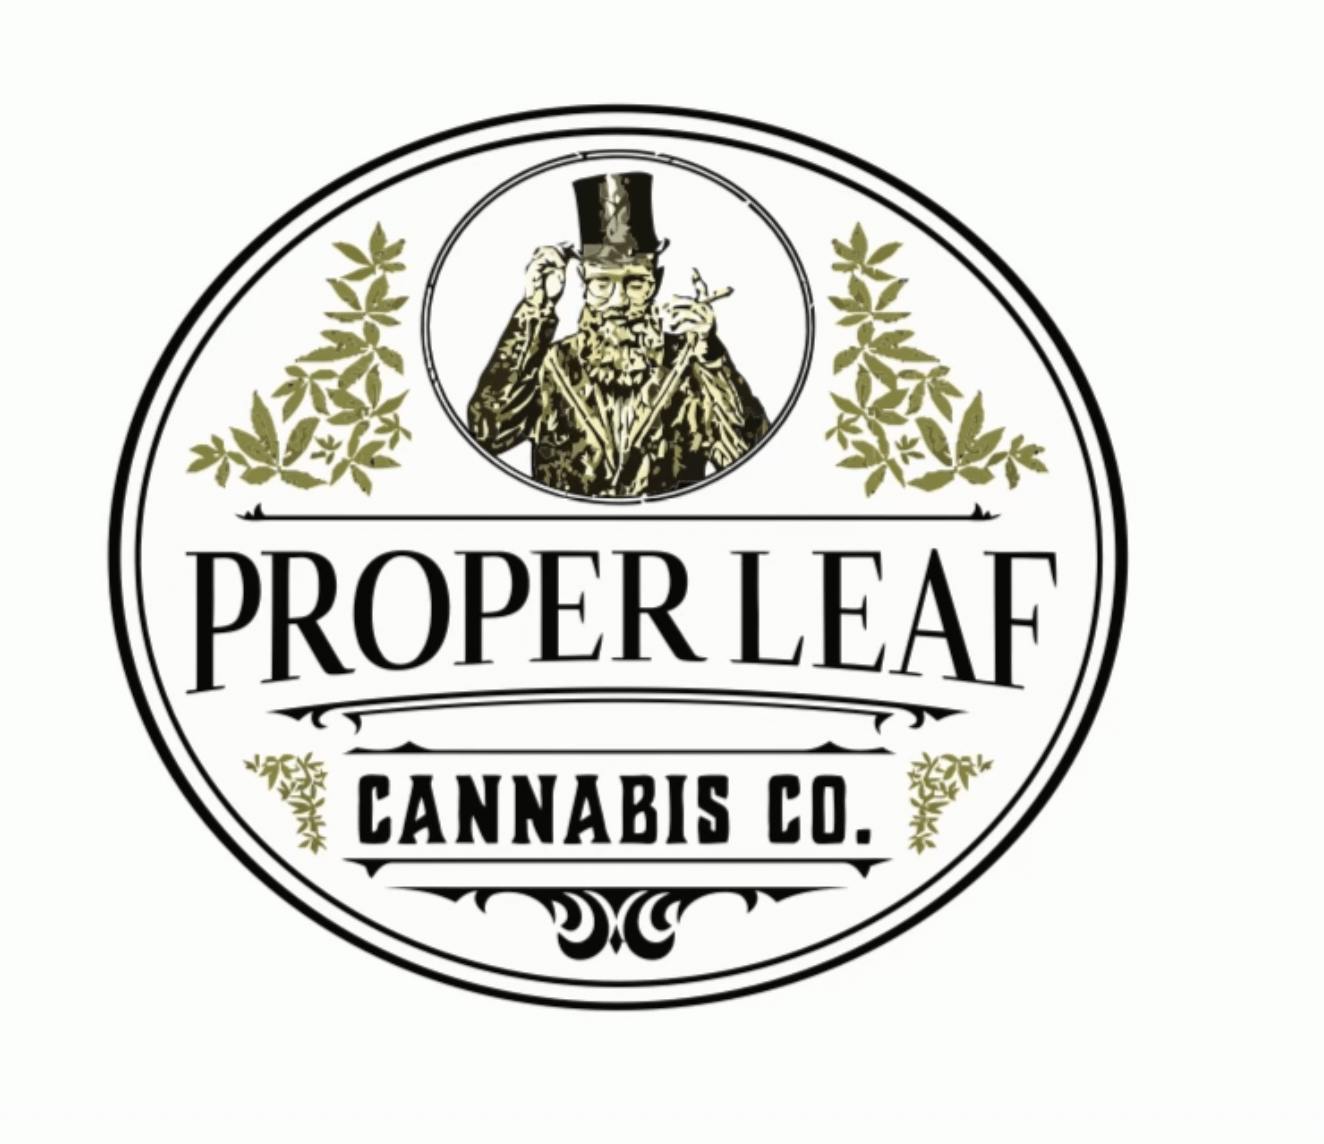 Proper Leaf Cannabis Co.